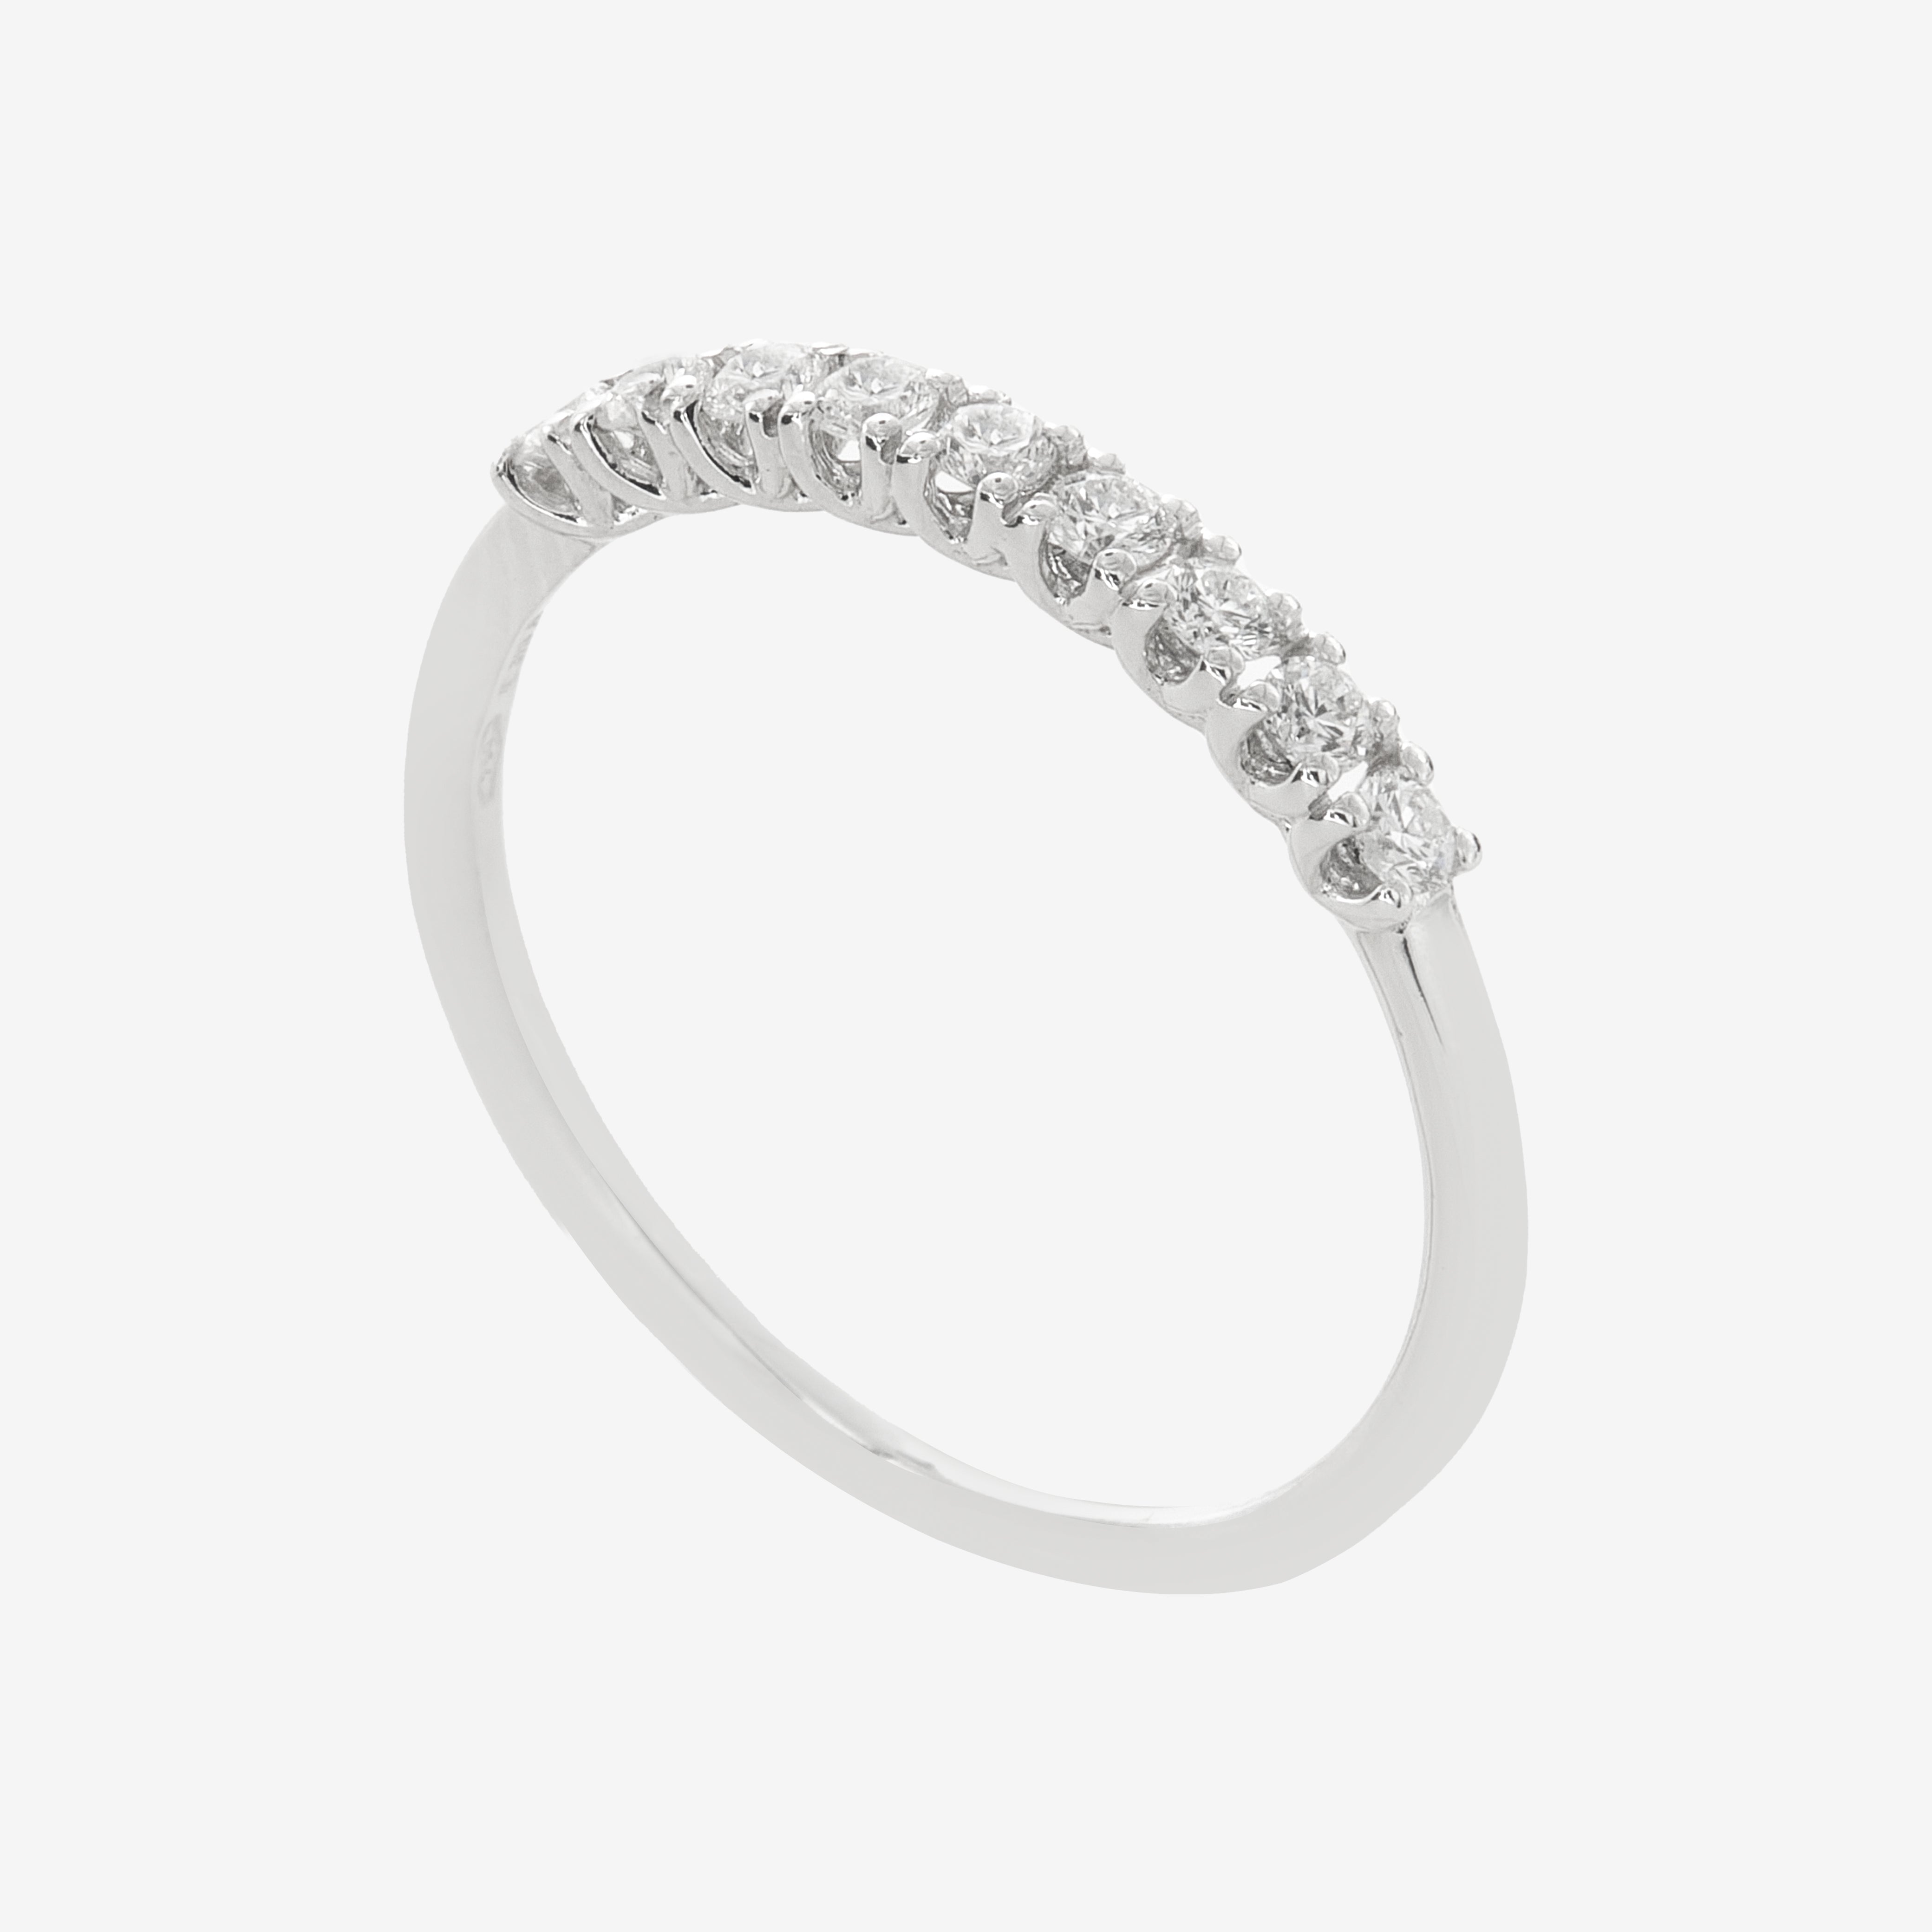 Semi-eternity ring with white diamonds